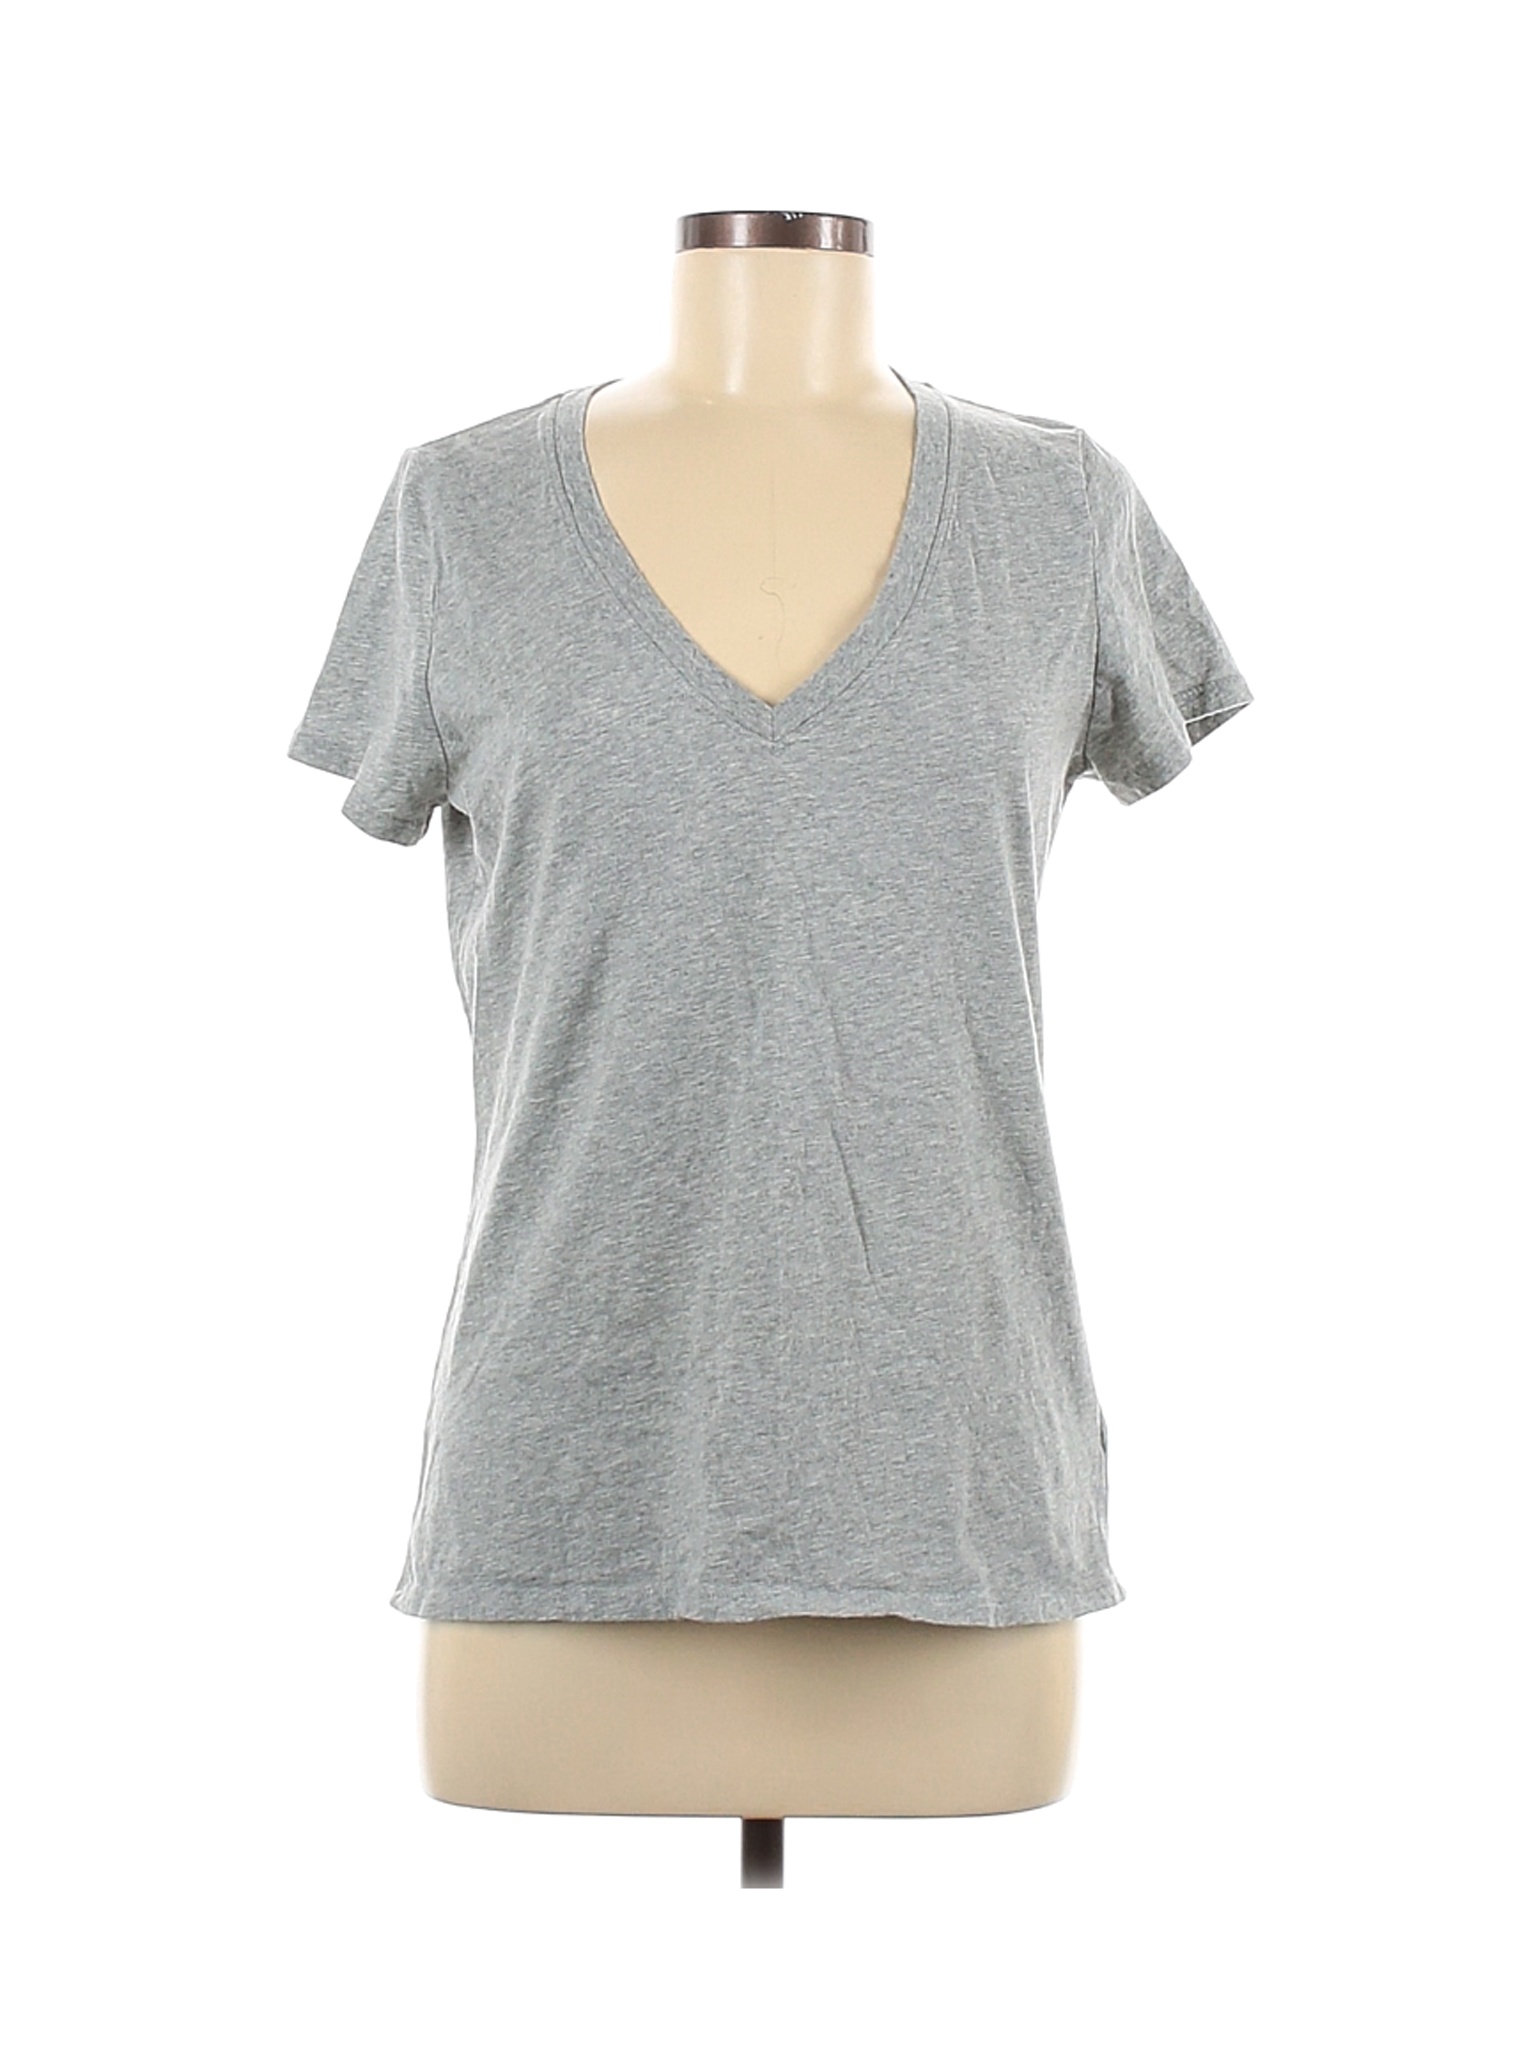 Gap Women Gray Short Sleeve T-Shirt M | eBay